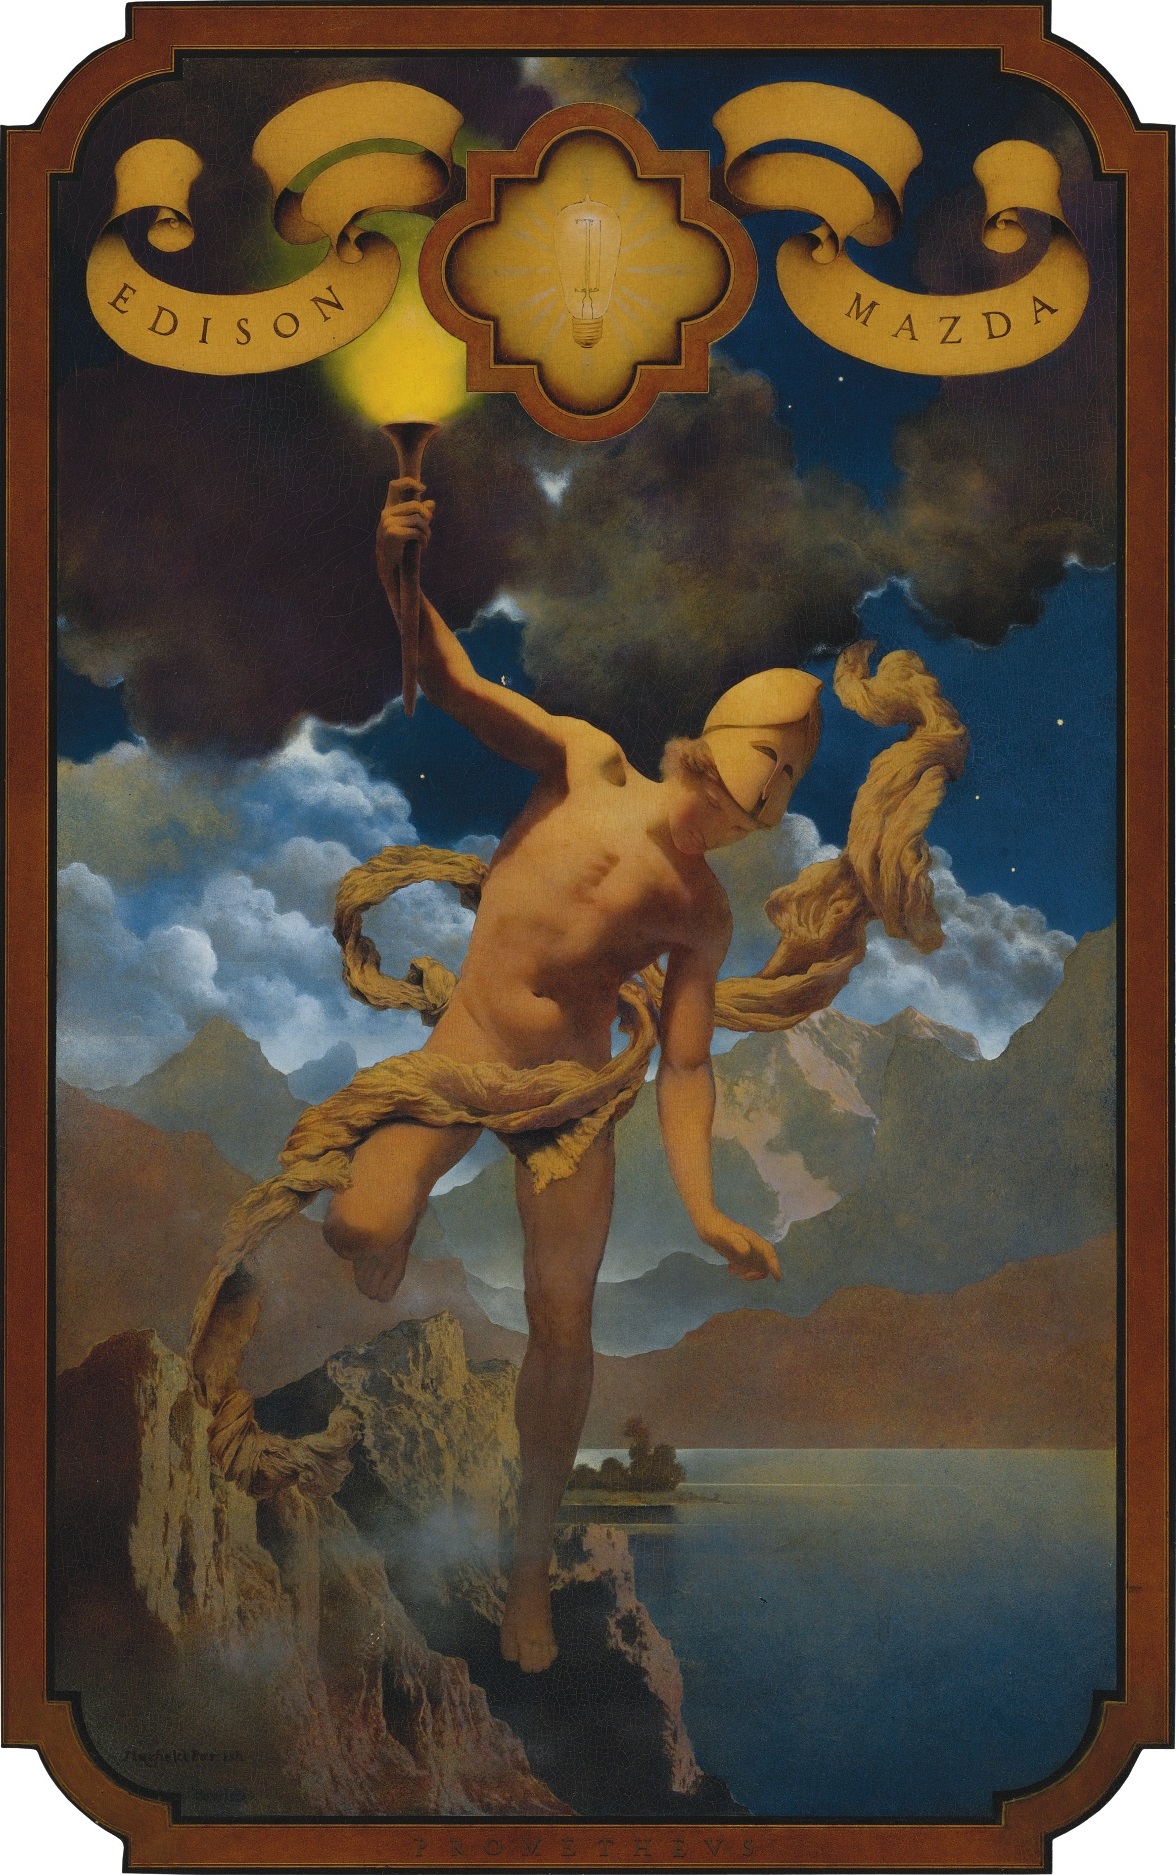 Maxfield Parrish (1870-1966), Prometheus, oil on panel, 1919. The Illustrated Gallery, Fort Washington, Pa.  For 1920 GE Edison Mazda calendar.